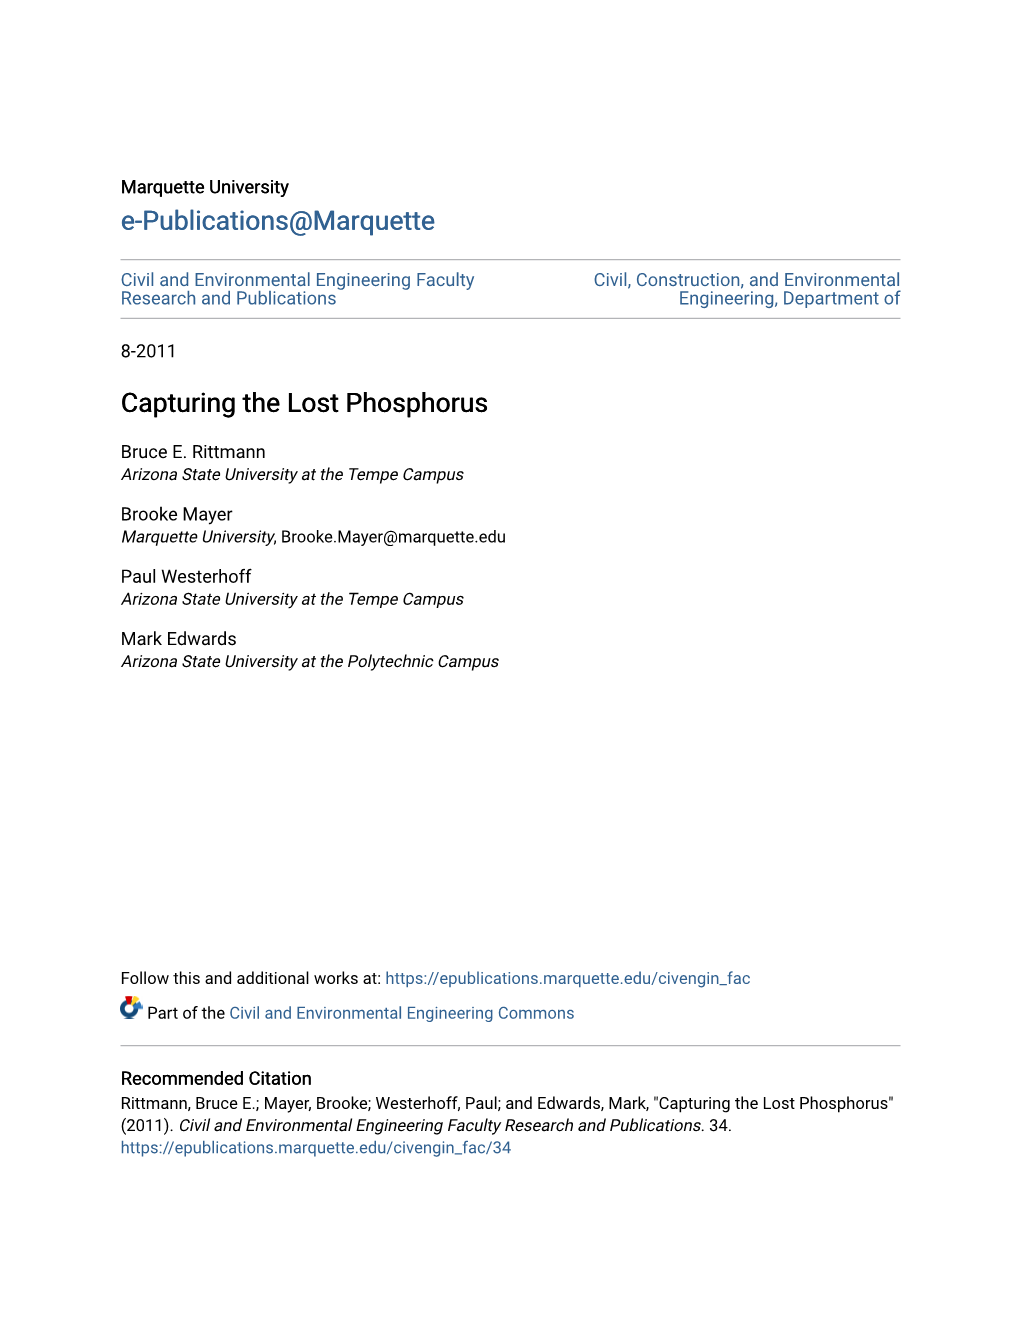 Capturing the Lost Phosphorus